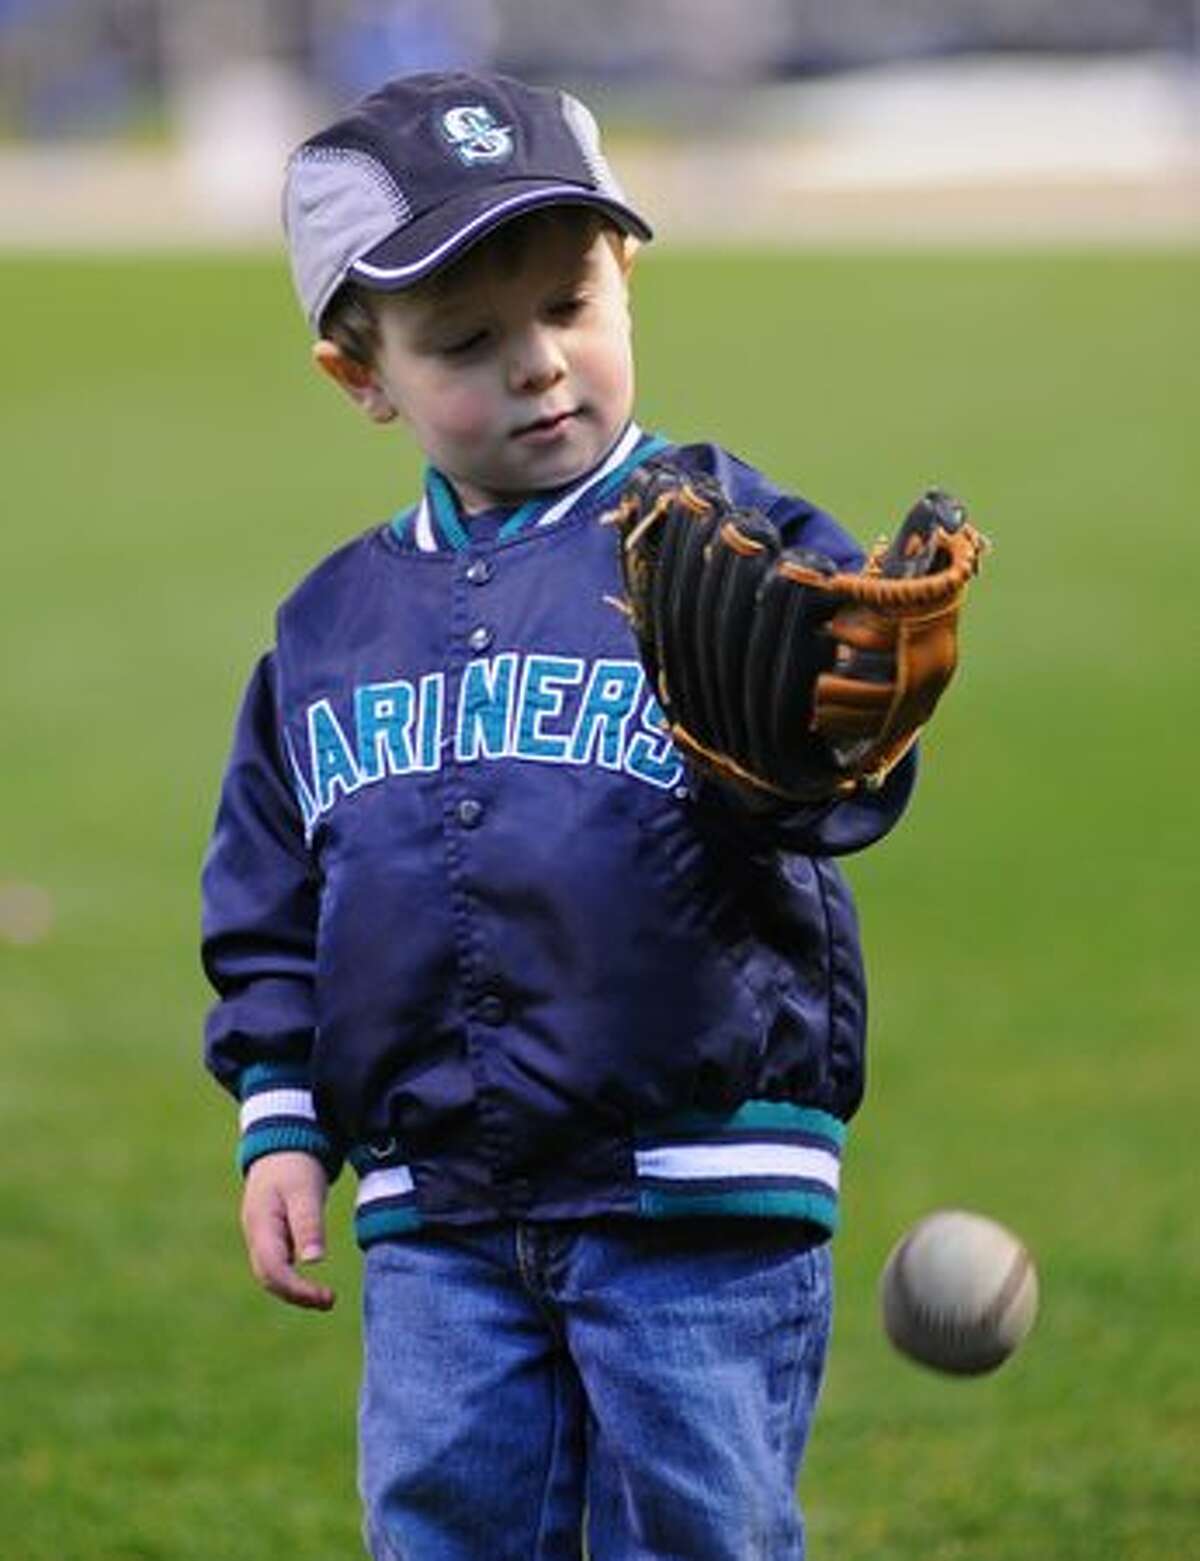 Max Vukelic, 2, plays catch.